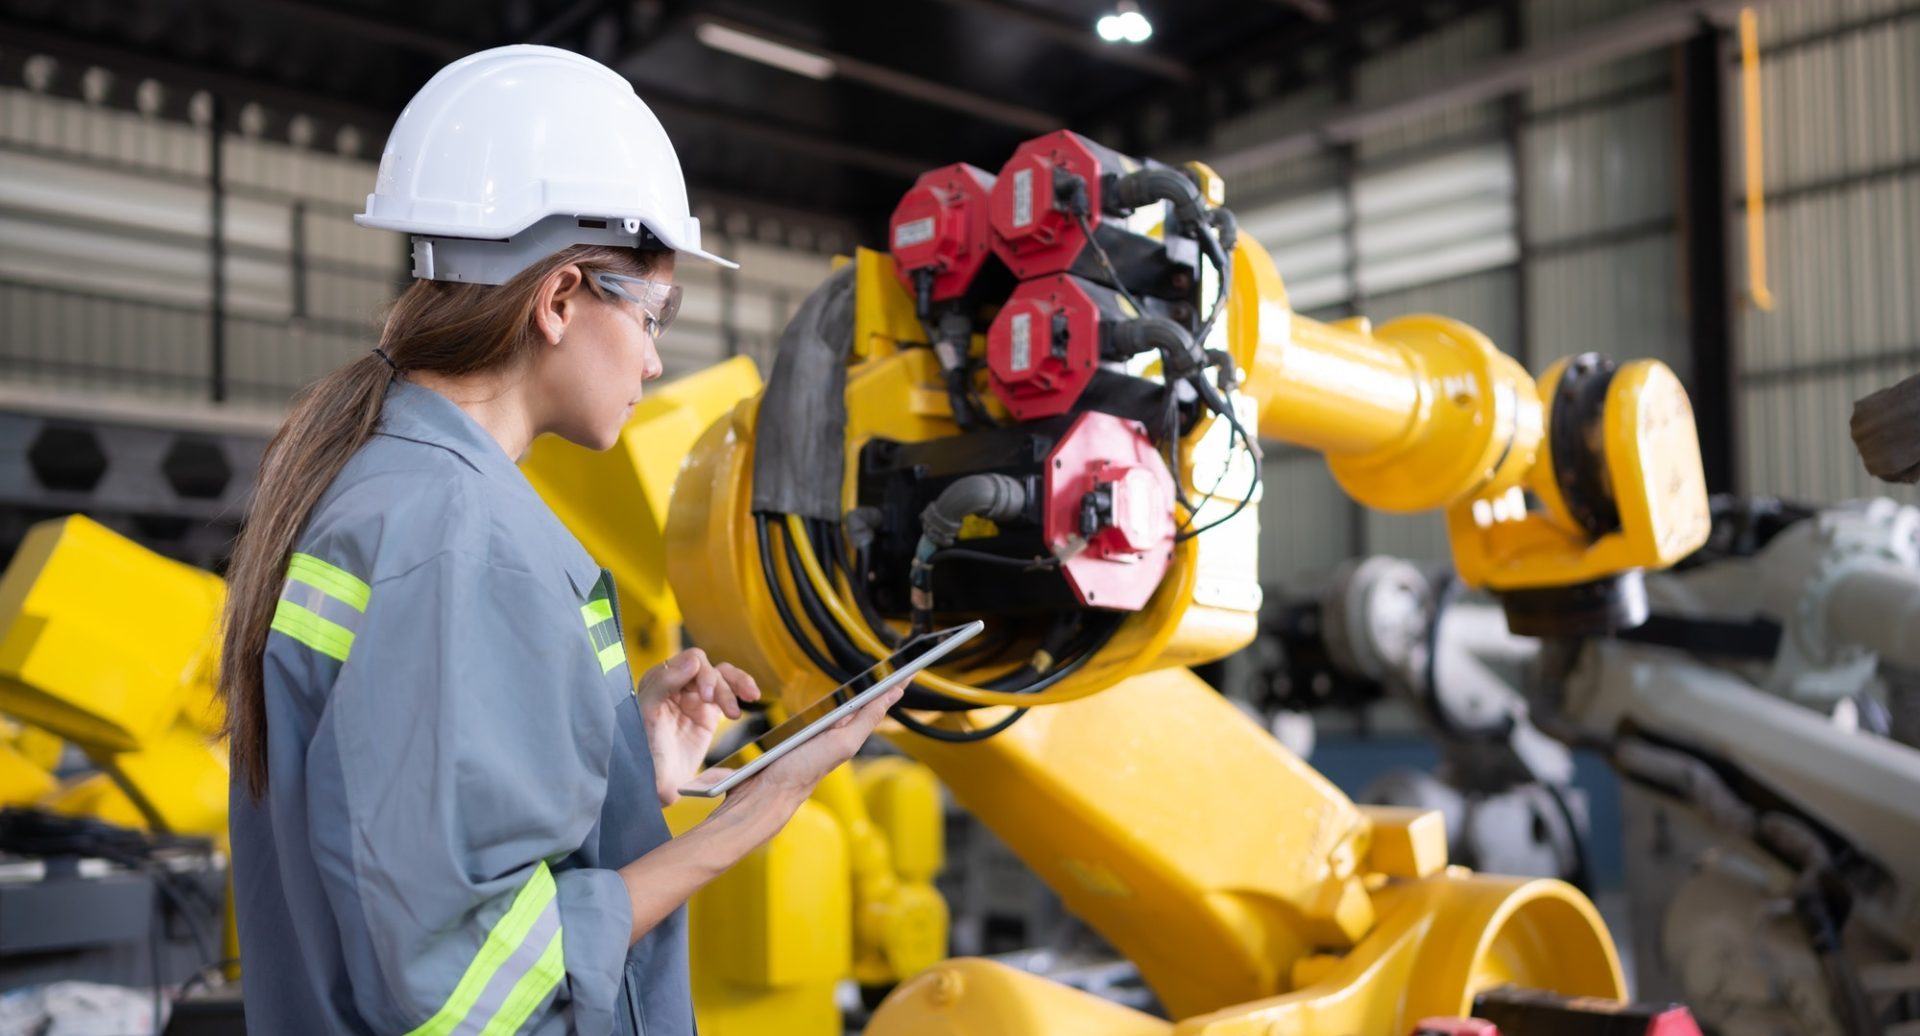 A female engineer installs a program on a robotics arm in a robot warehouse.